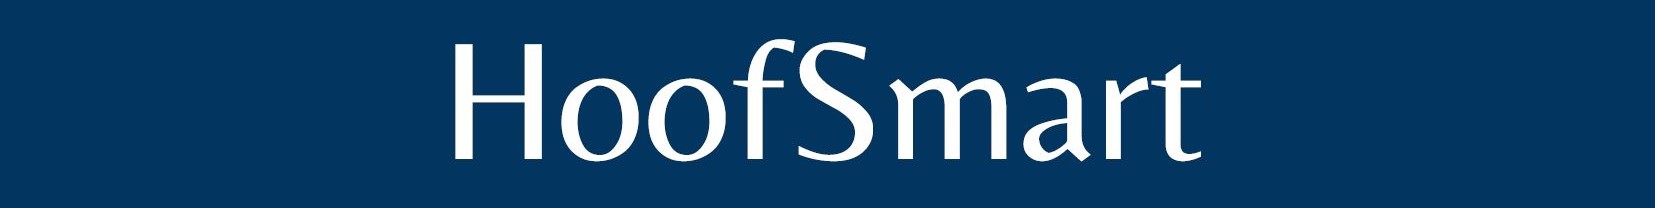 Hoofsmart logo - blue background - hoofsmart work in white font